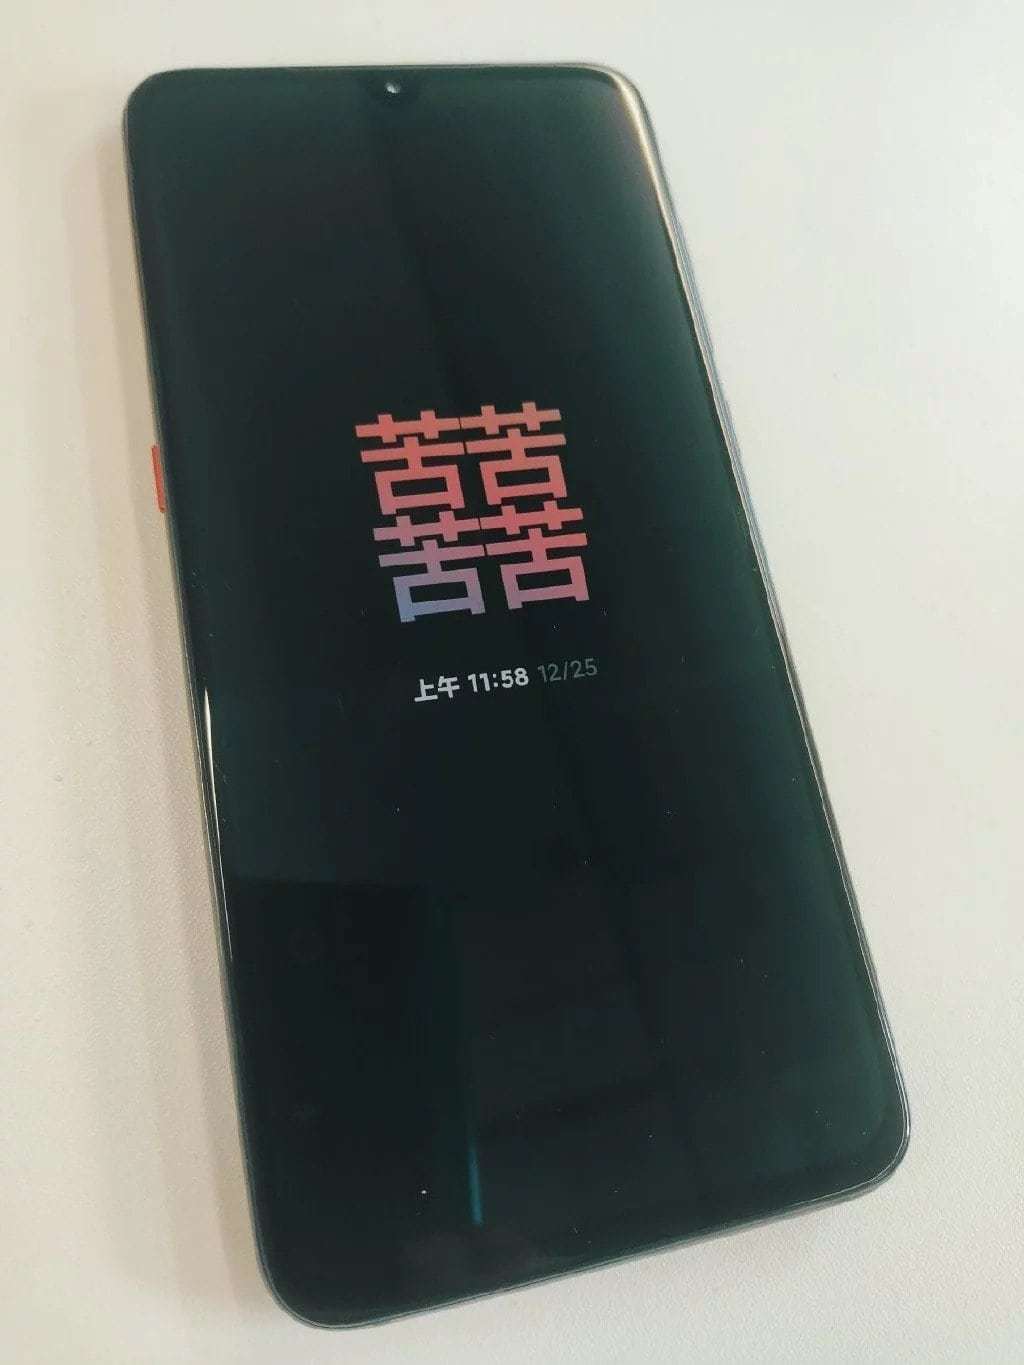 Xiaomi's new ambient display clock